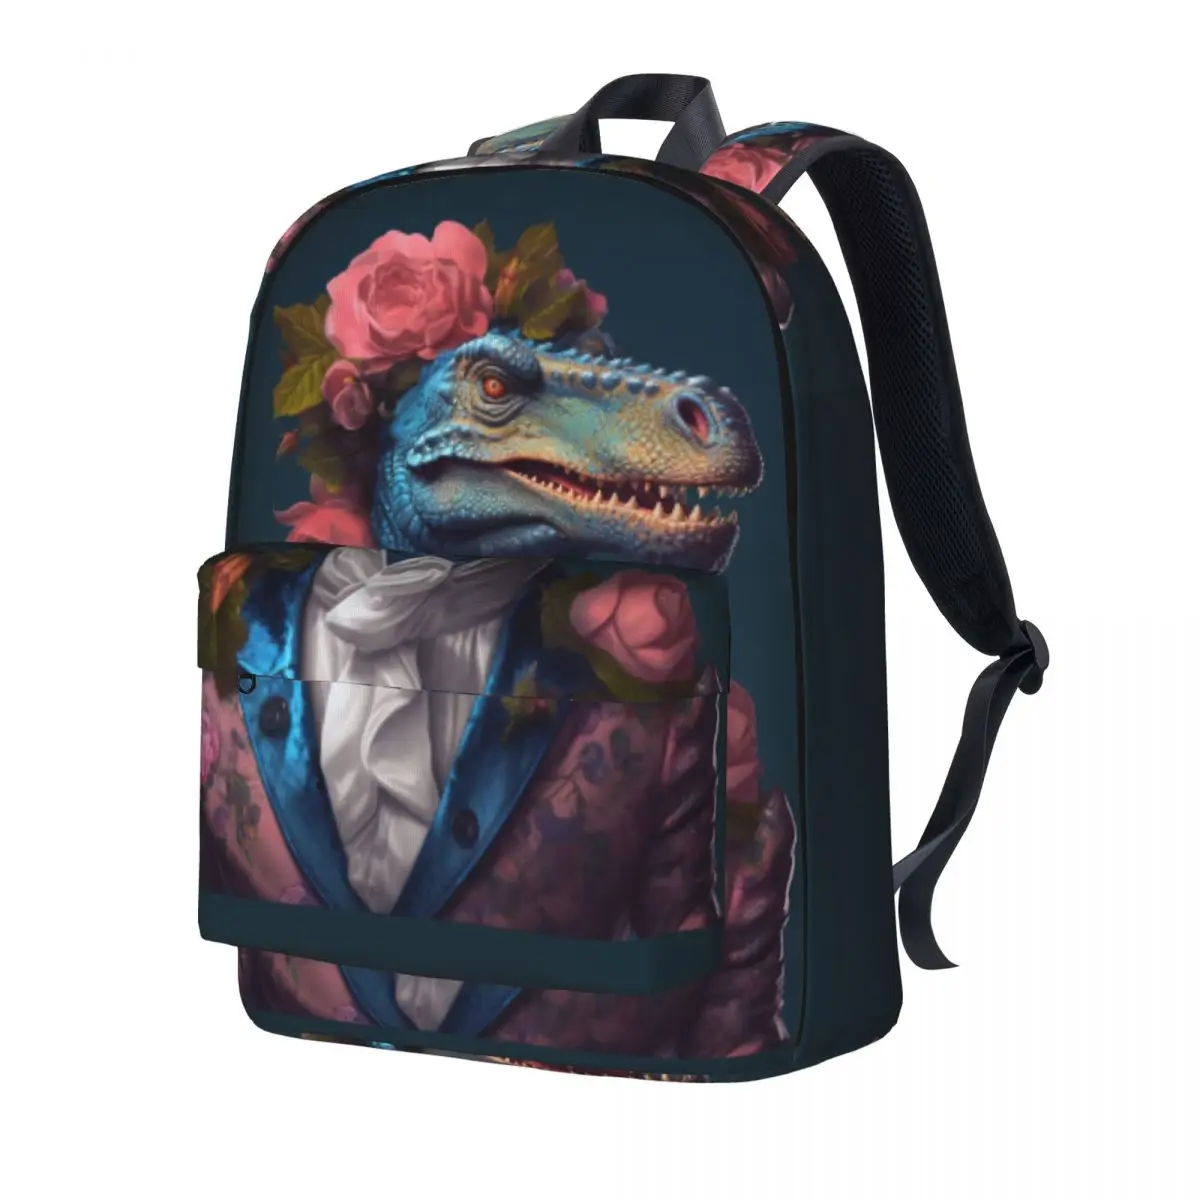 

Dinosaur Backpack Dapper Clothing Amazing Portraits Outdoor Backpacks Teen Pretty High School Bags Colorful Big Rucksack